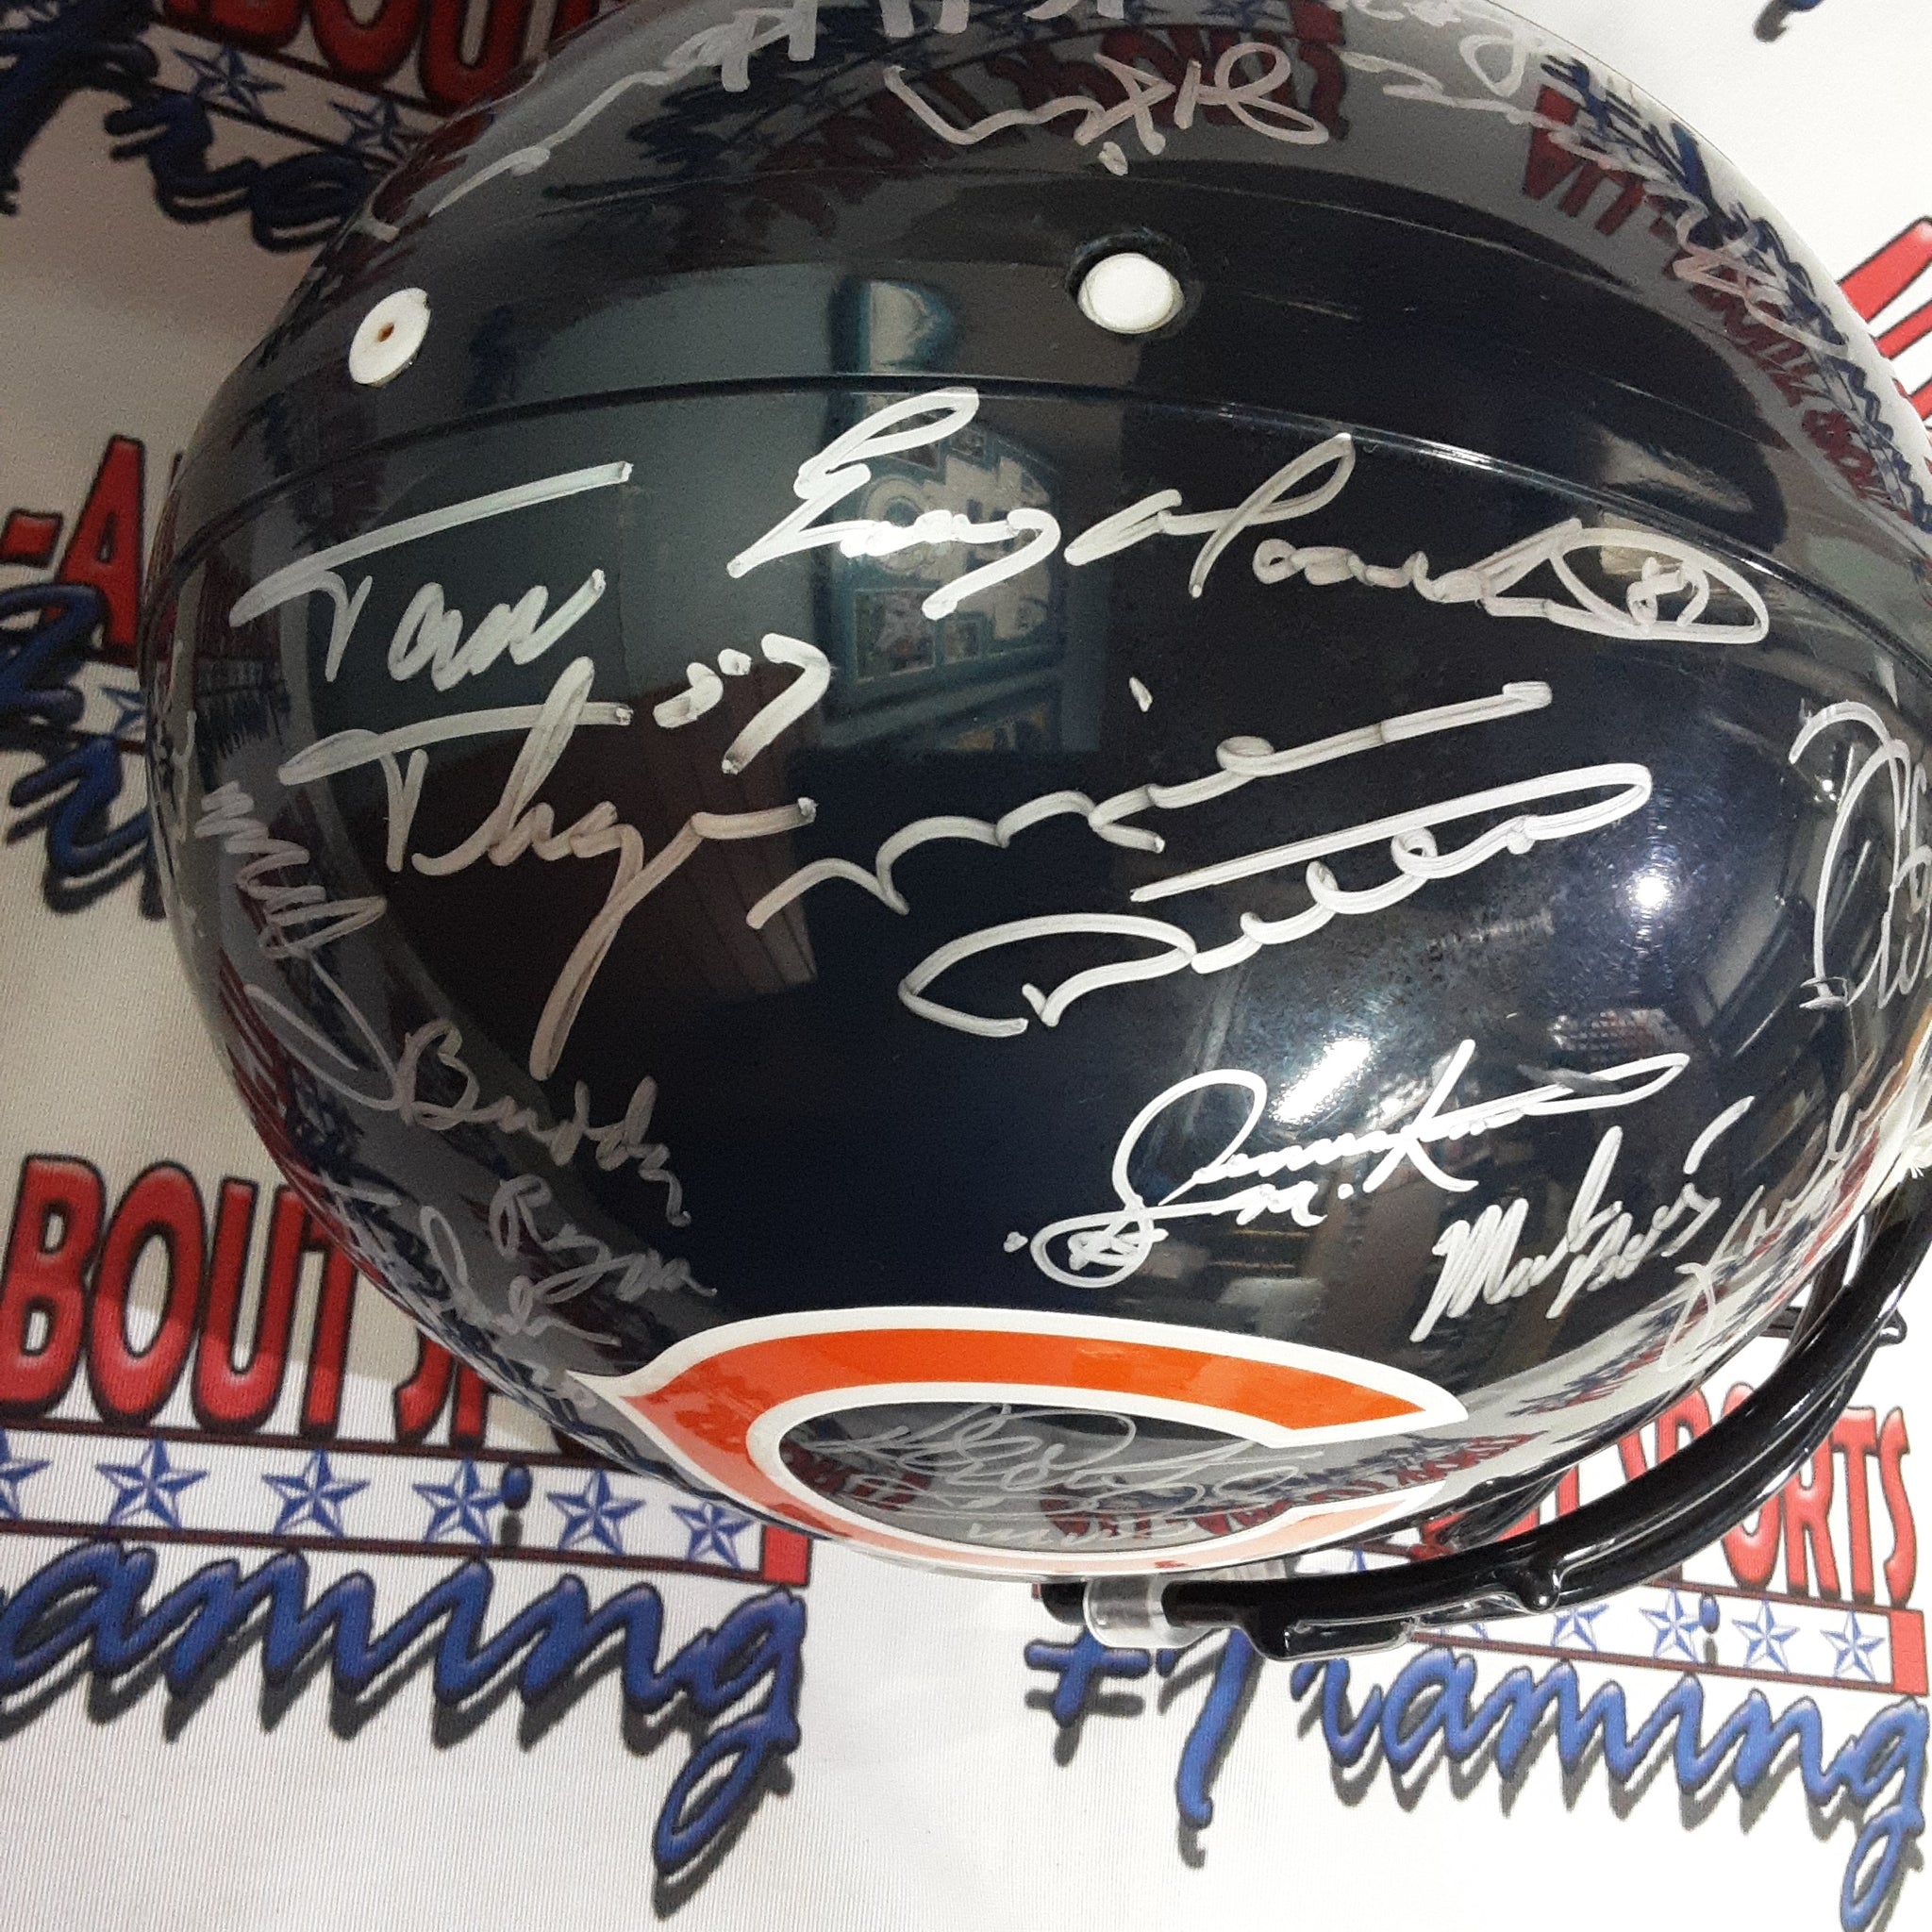 1985 Super Bowl XX Champions Reunion Team Signed Autographed Full-size Authentic Helmet JSA/LOA